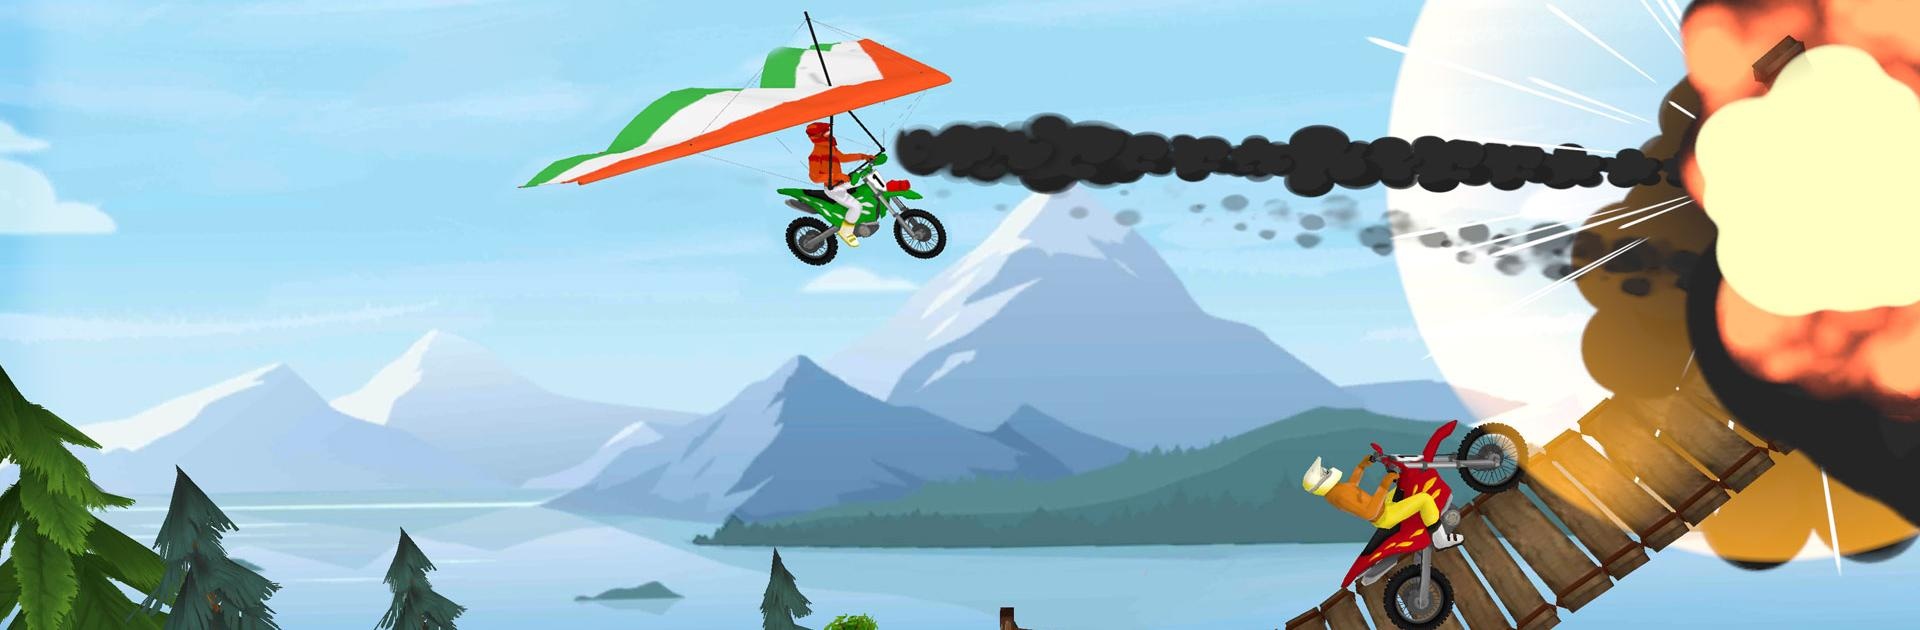 Airborne MX - гонки и летать